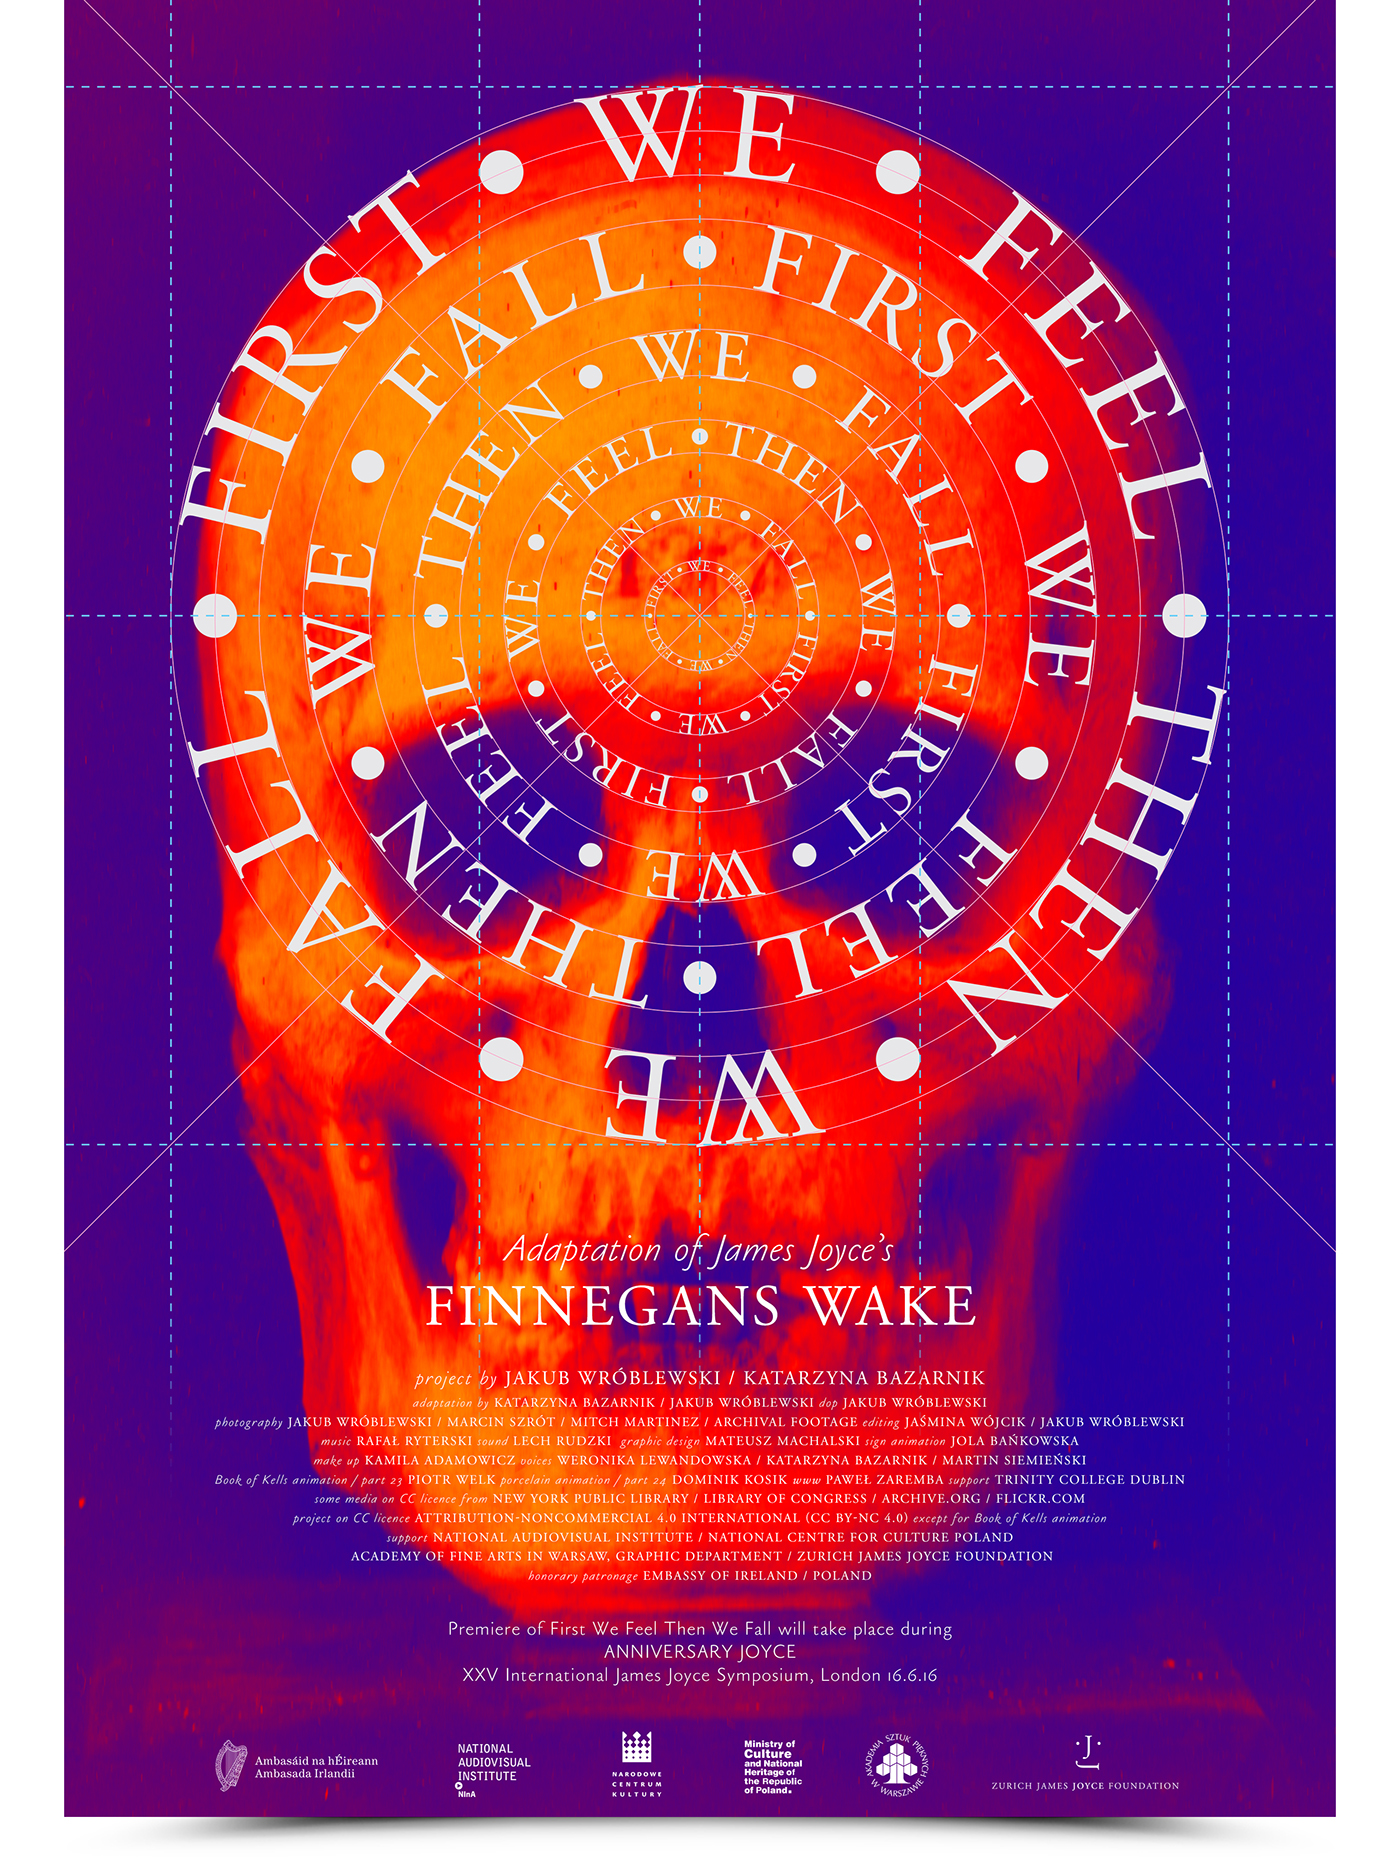 FWFTWF movie identity MACHALSKI mateusz Web art Project poster joyce Finnegans Wake ASP